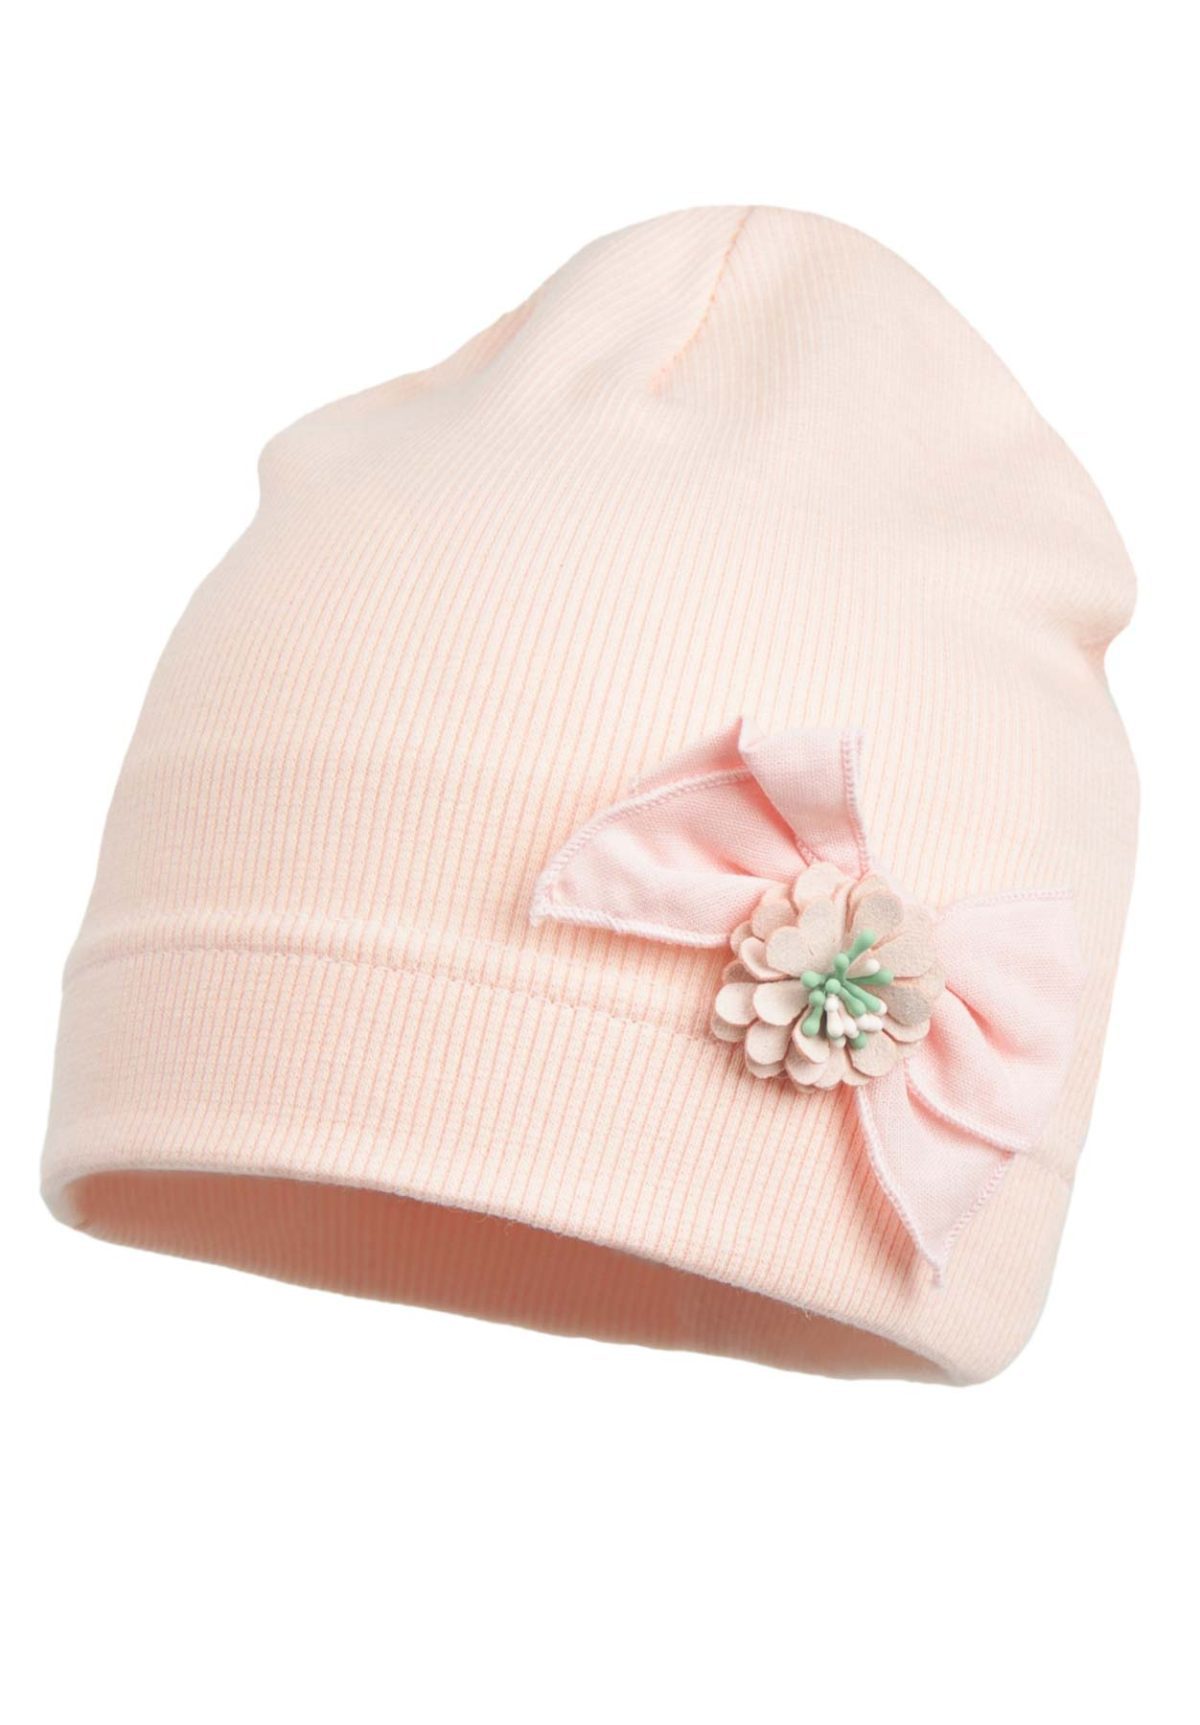 JAMIKS Čiapka s mašľou a kvetom ružová Shira Hat with bow and flower pink JWF016 | Welcomebaby.sk